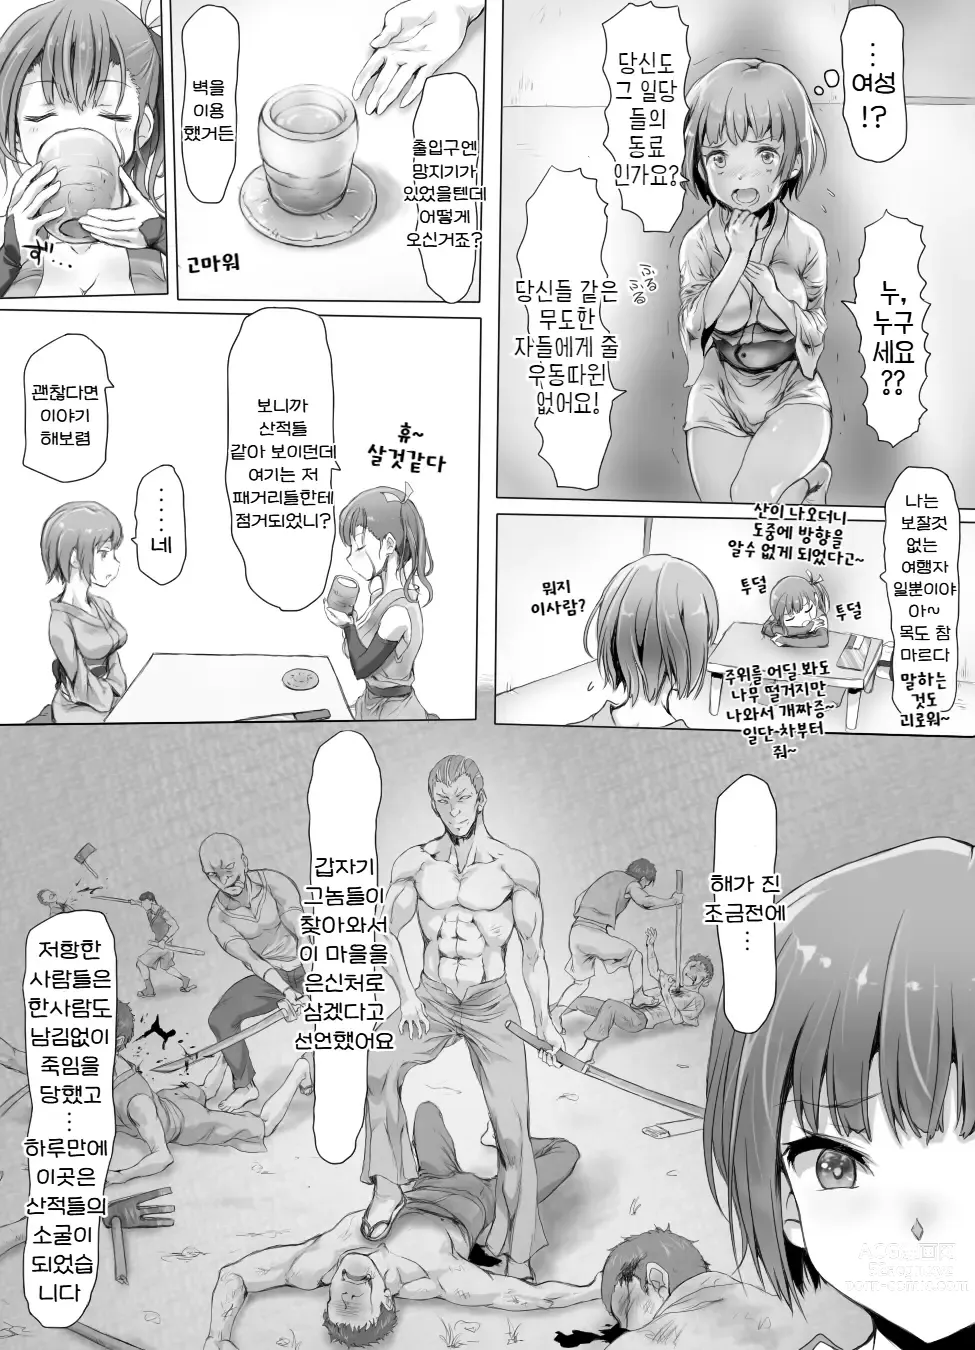 Page 9 of doujinshi 음착소녀 ~이렇게까지 굴욕을 당했는데도 아직도 살고 싶은 거니?~